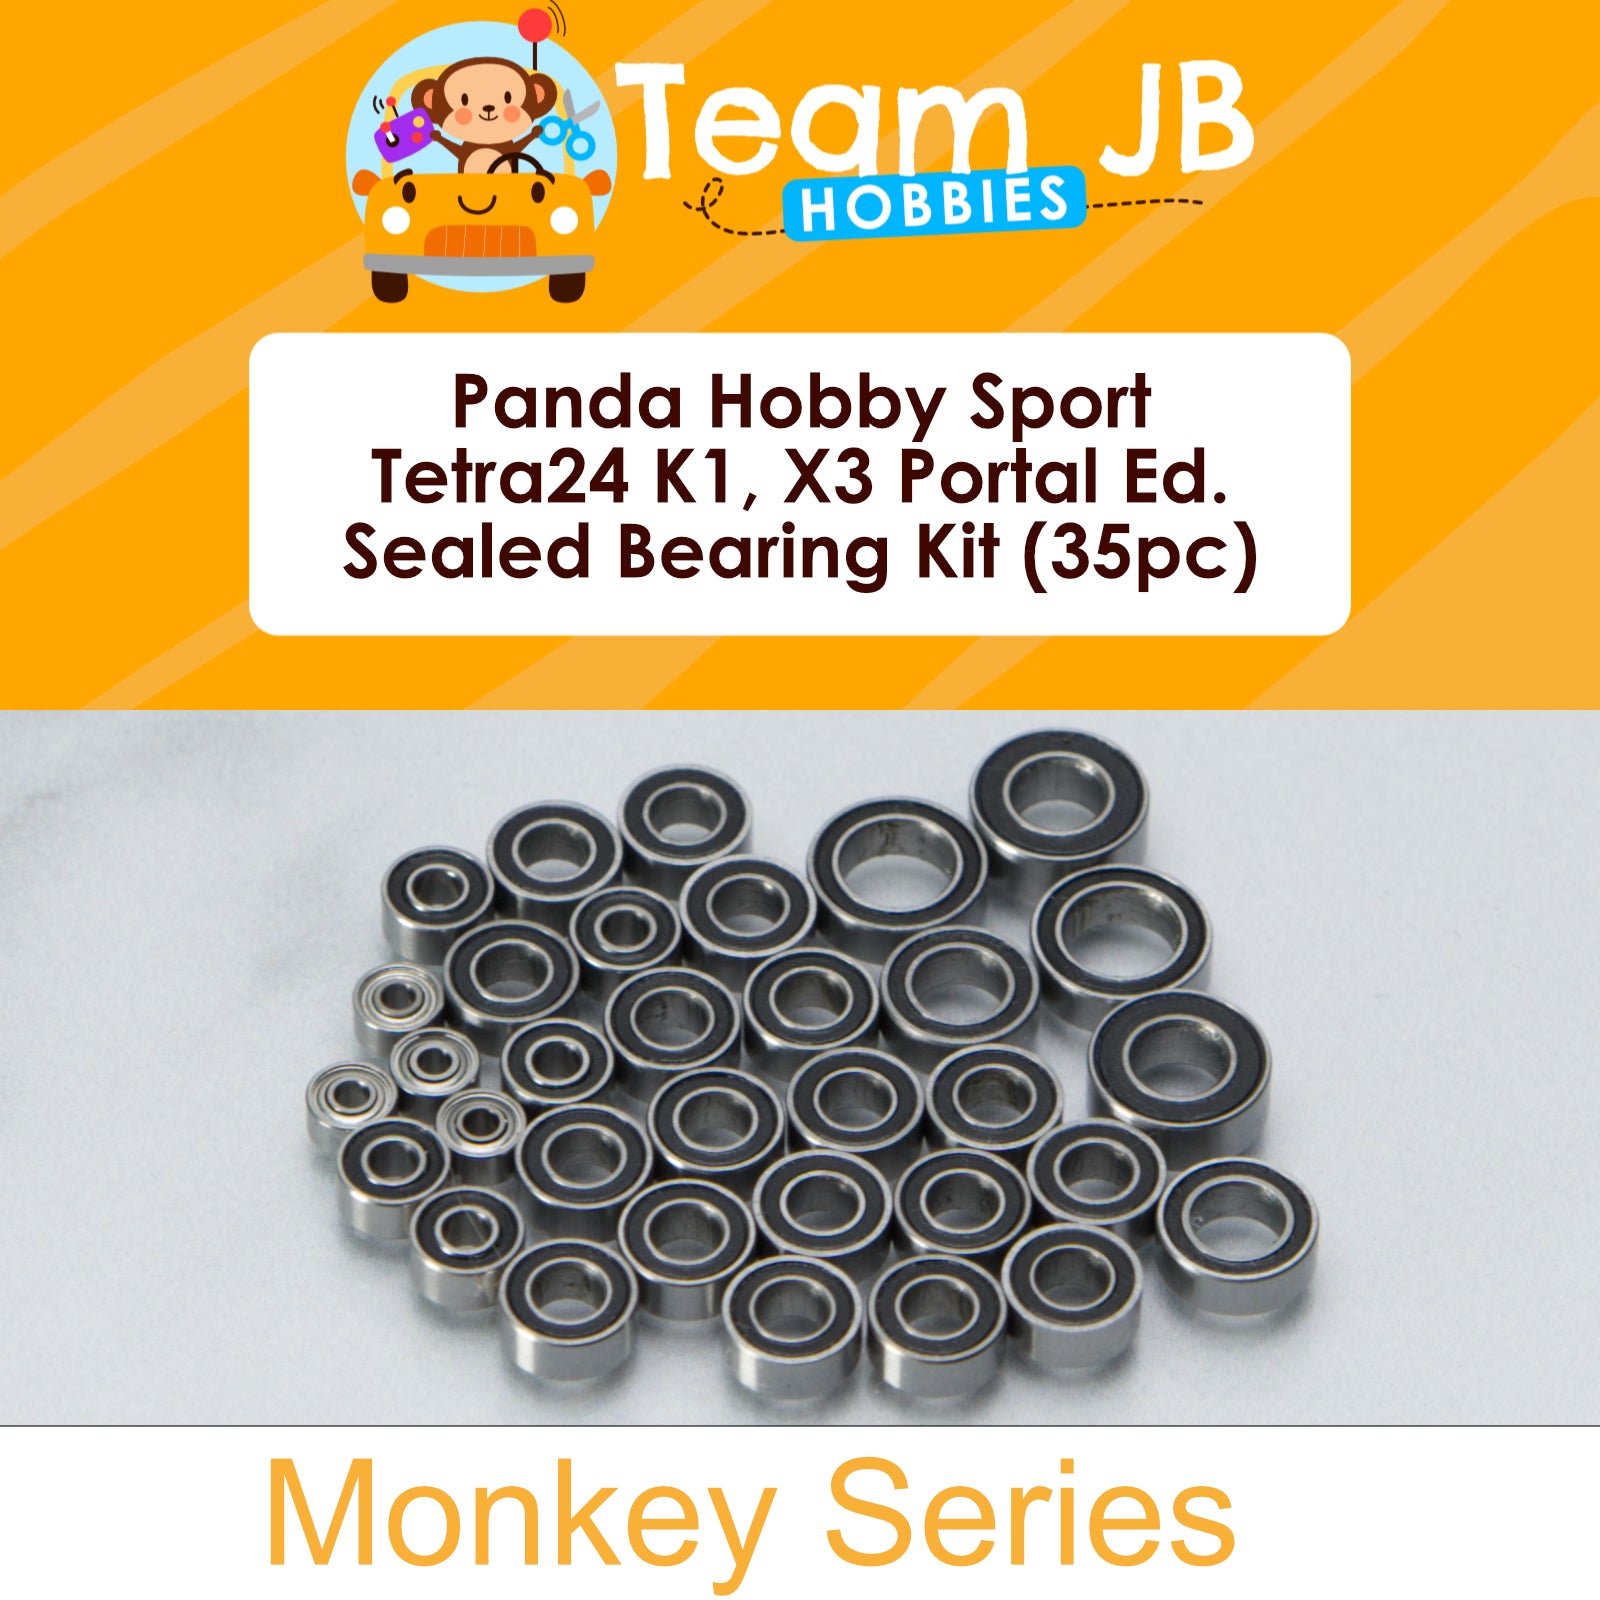 Panda Hobby Sport Tetra24 K1 Portal Ed., Tetra24 X3 Portal Ed. - Sealed Bearing Kit